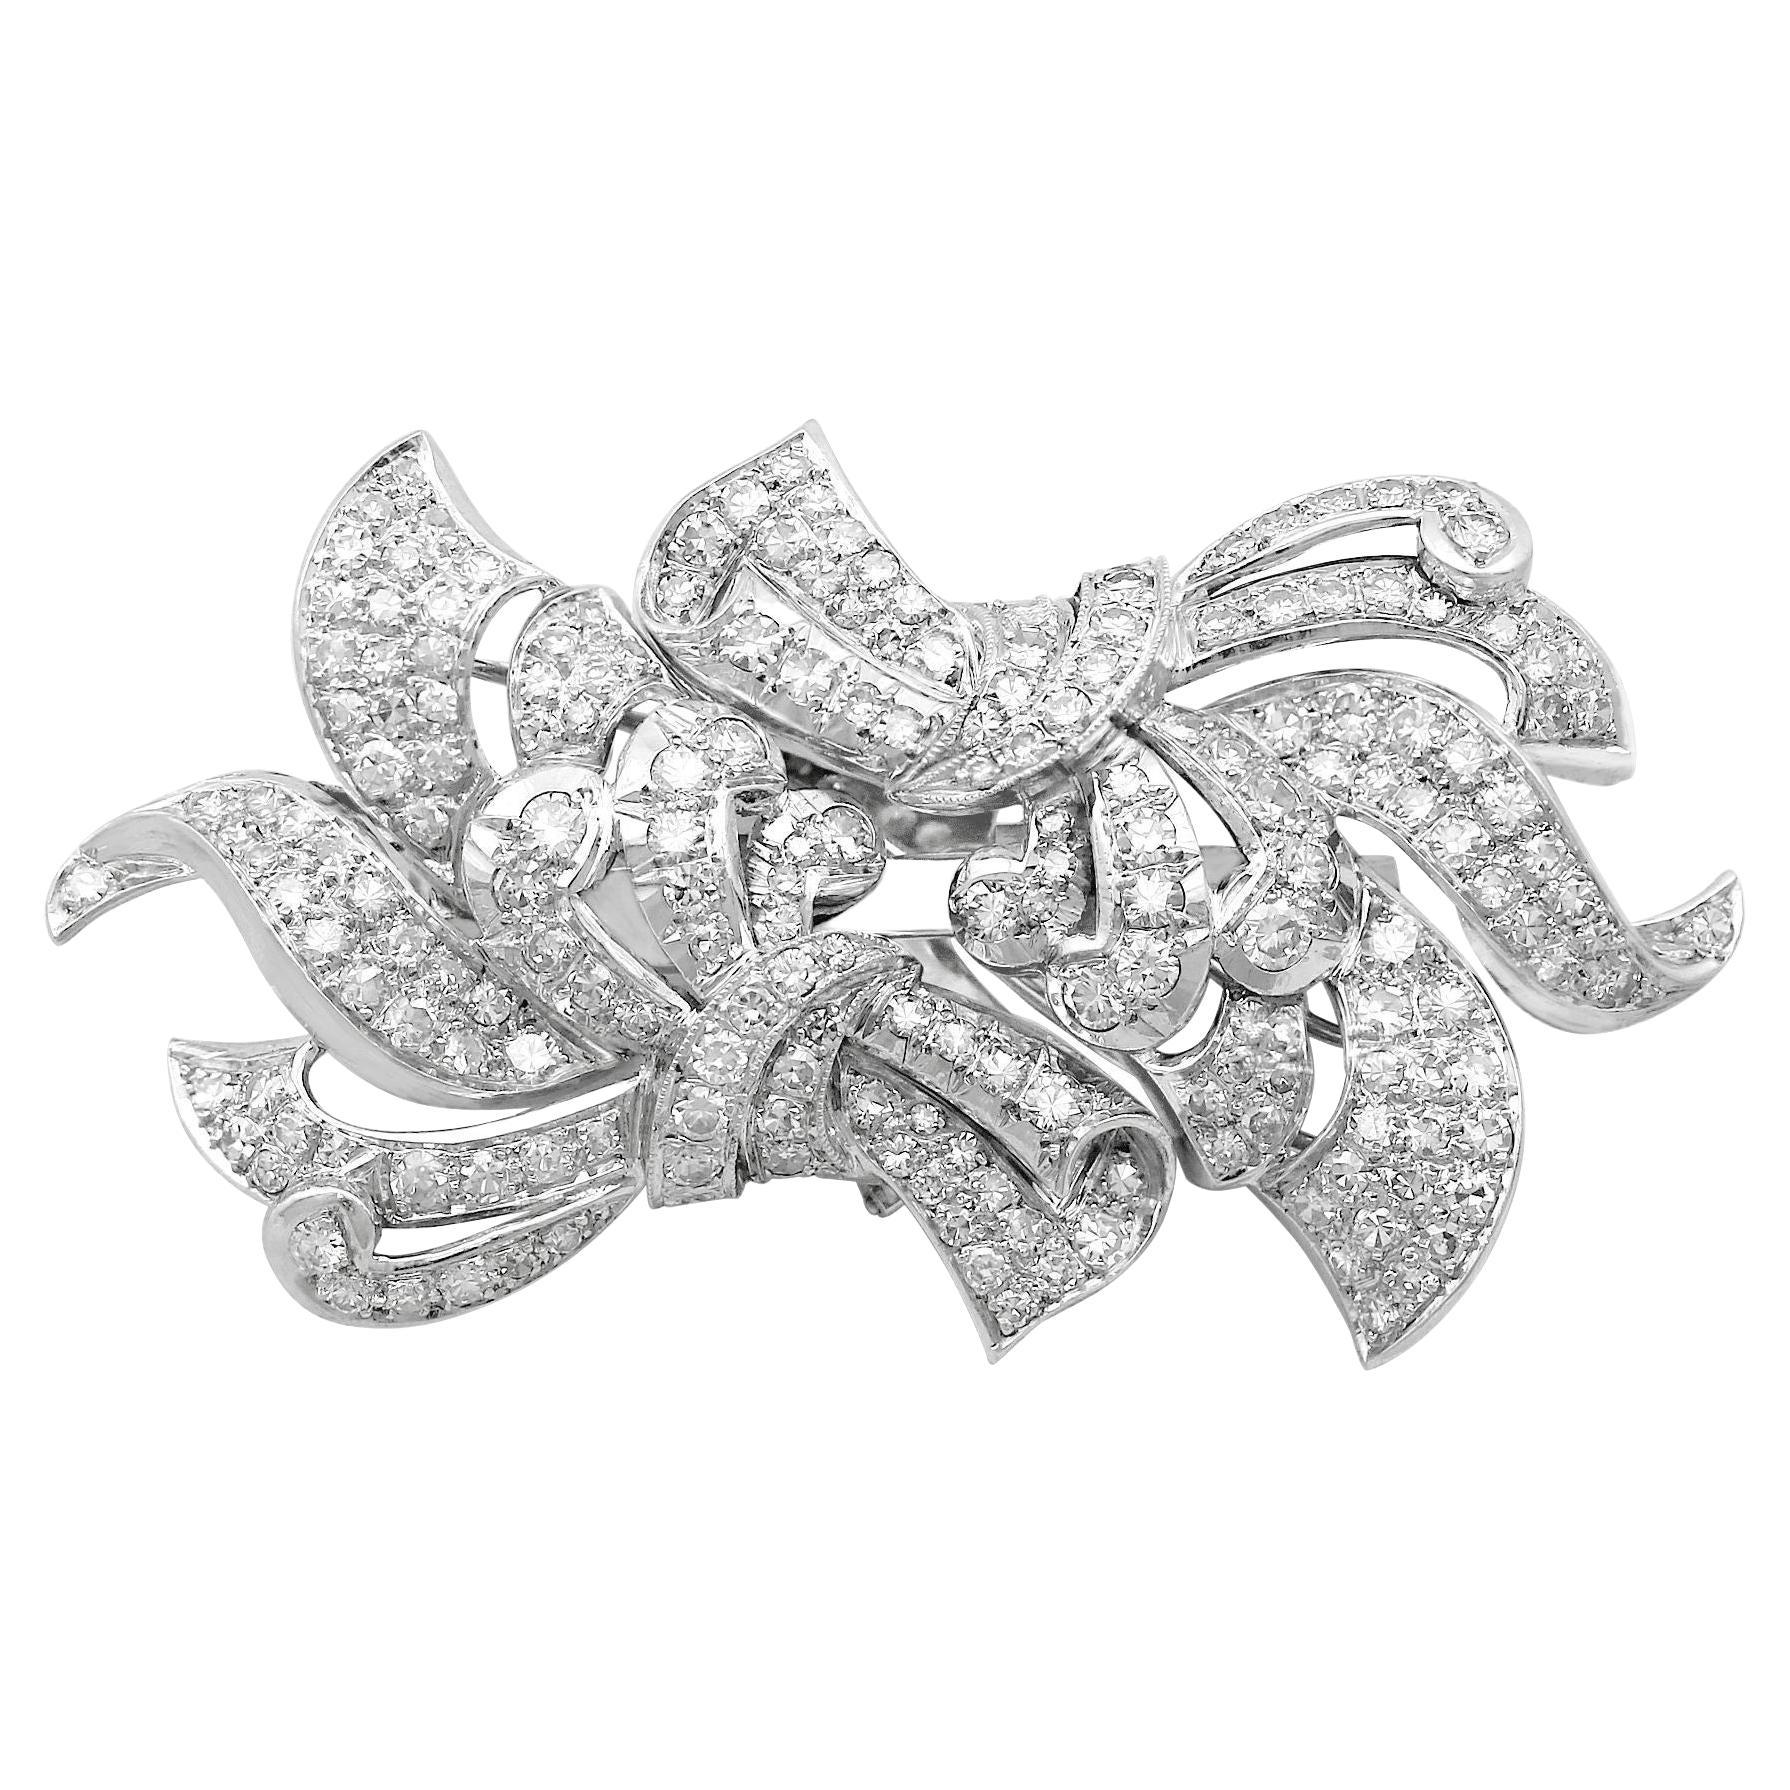 Art Deco 6.23 Carat Diamond Brooch